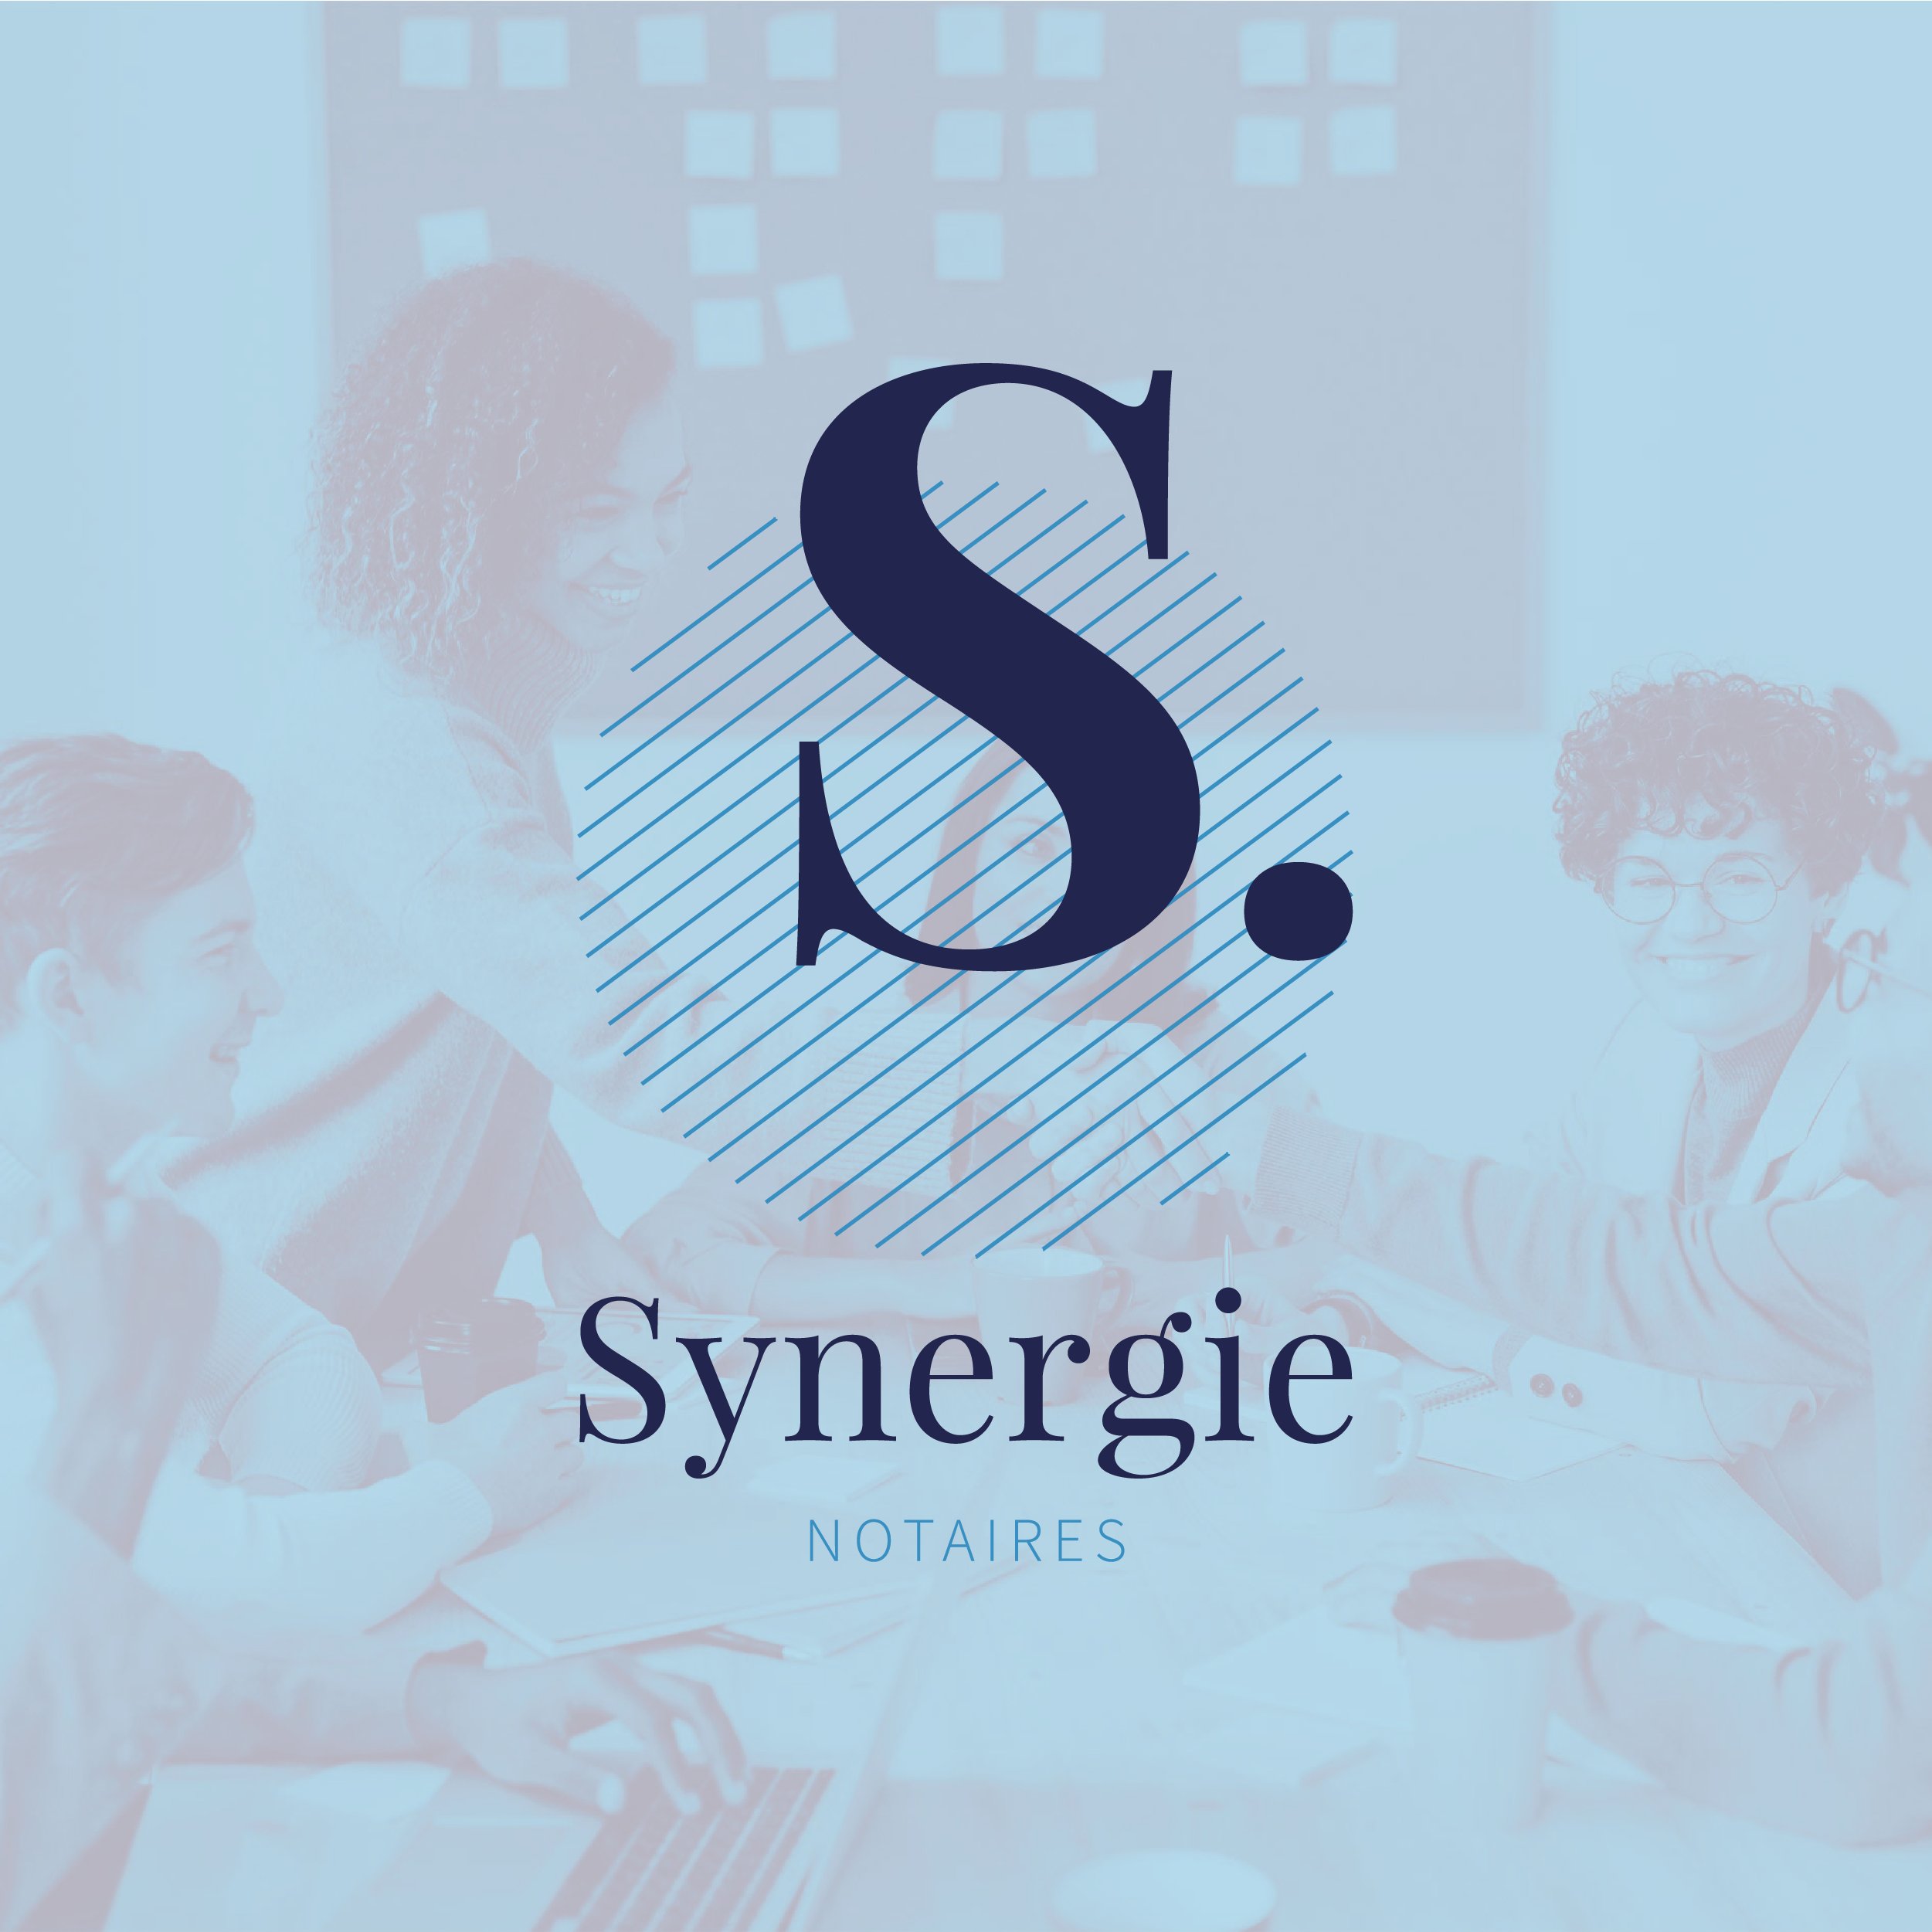 Synergie Notaire - Création de logo